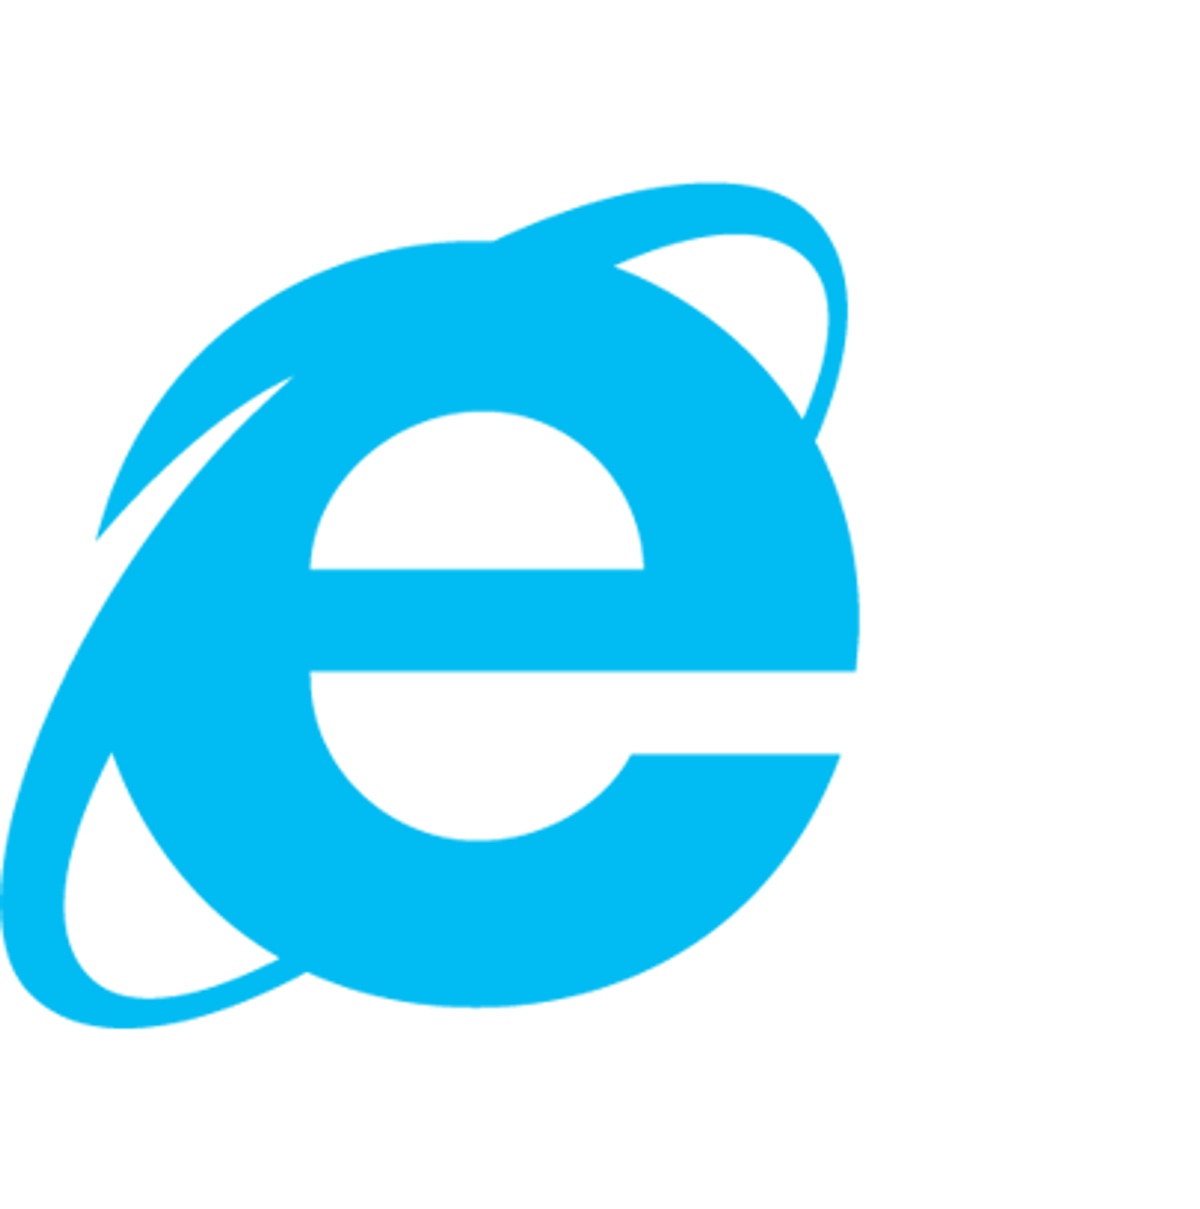 What Happened To Internet Explorer